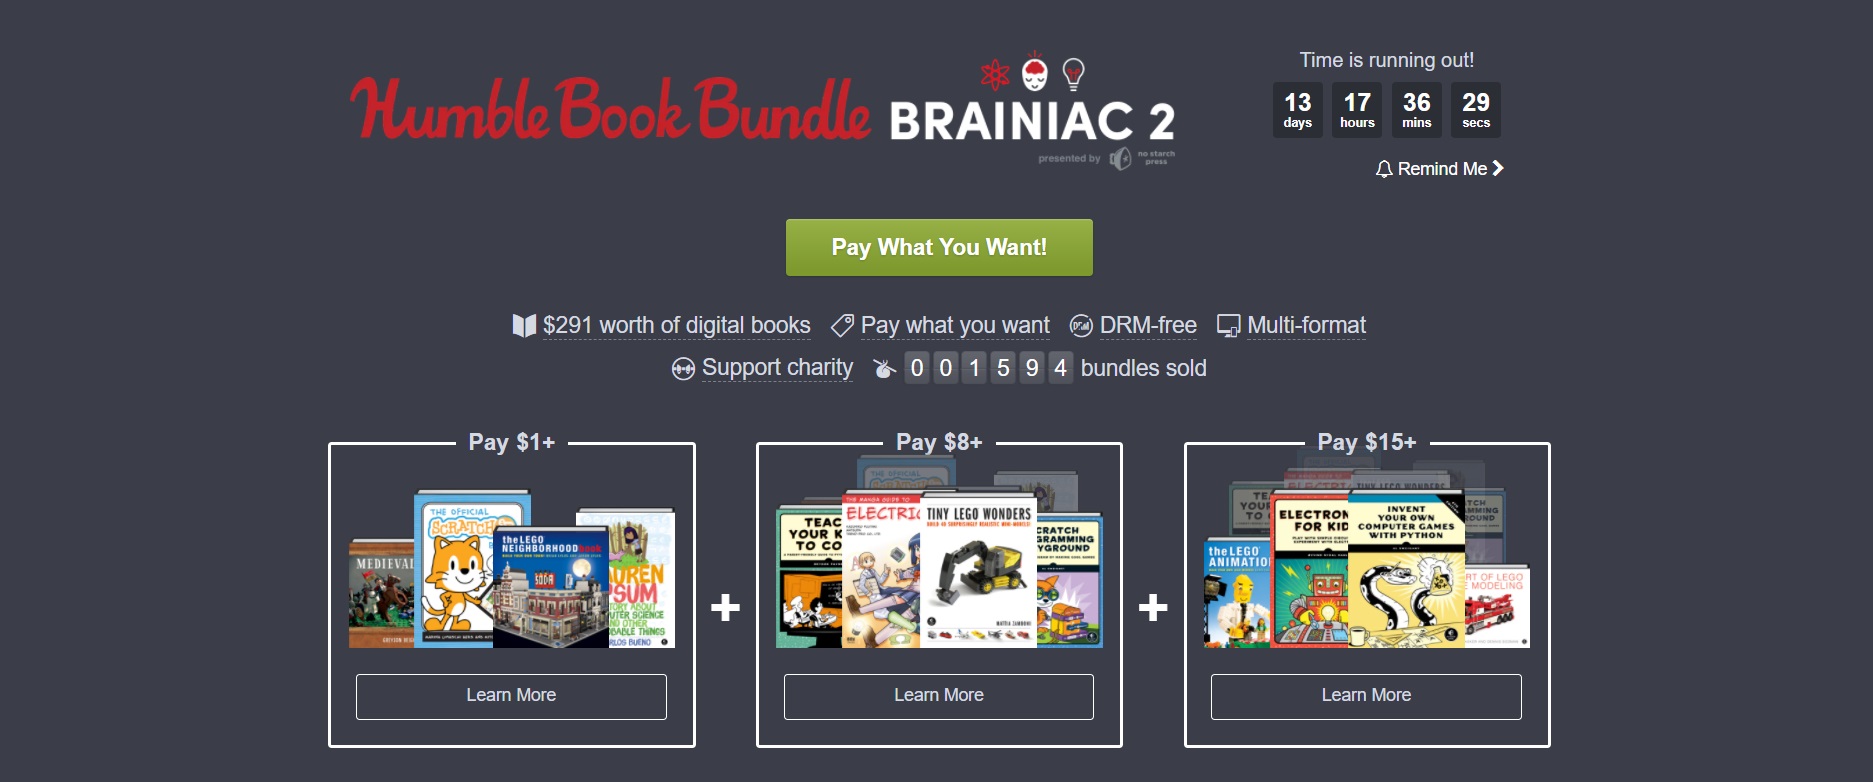 Humble Book Bundle Brainiac 2